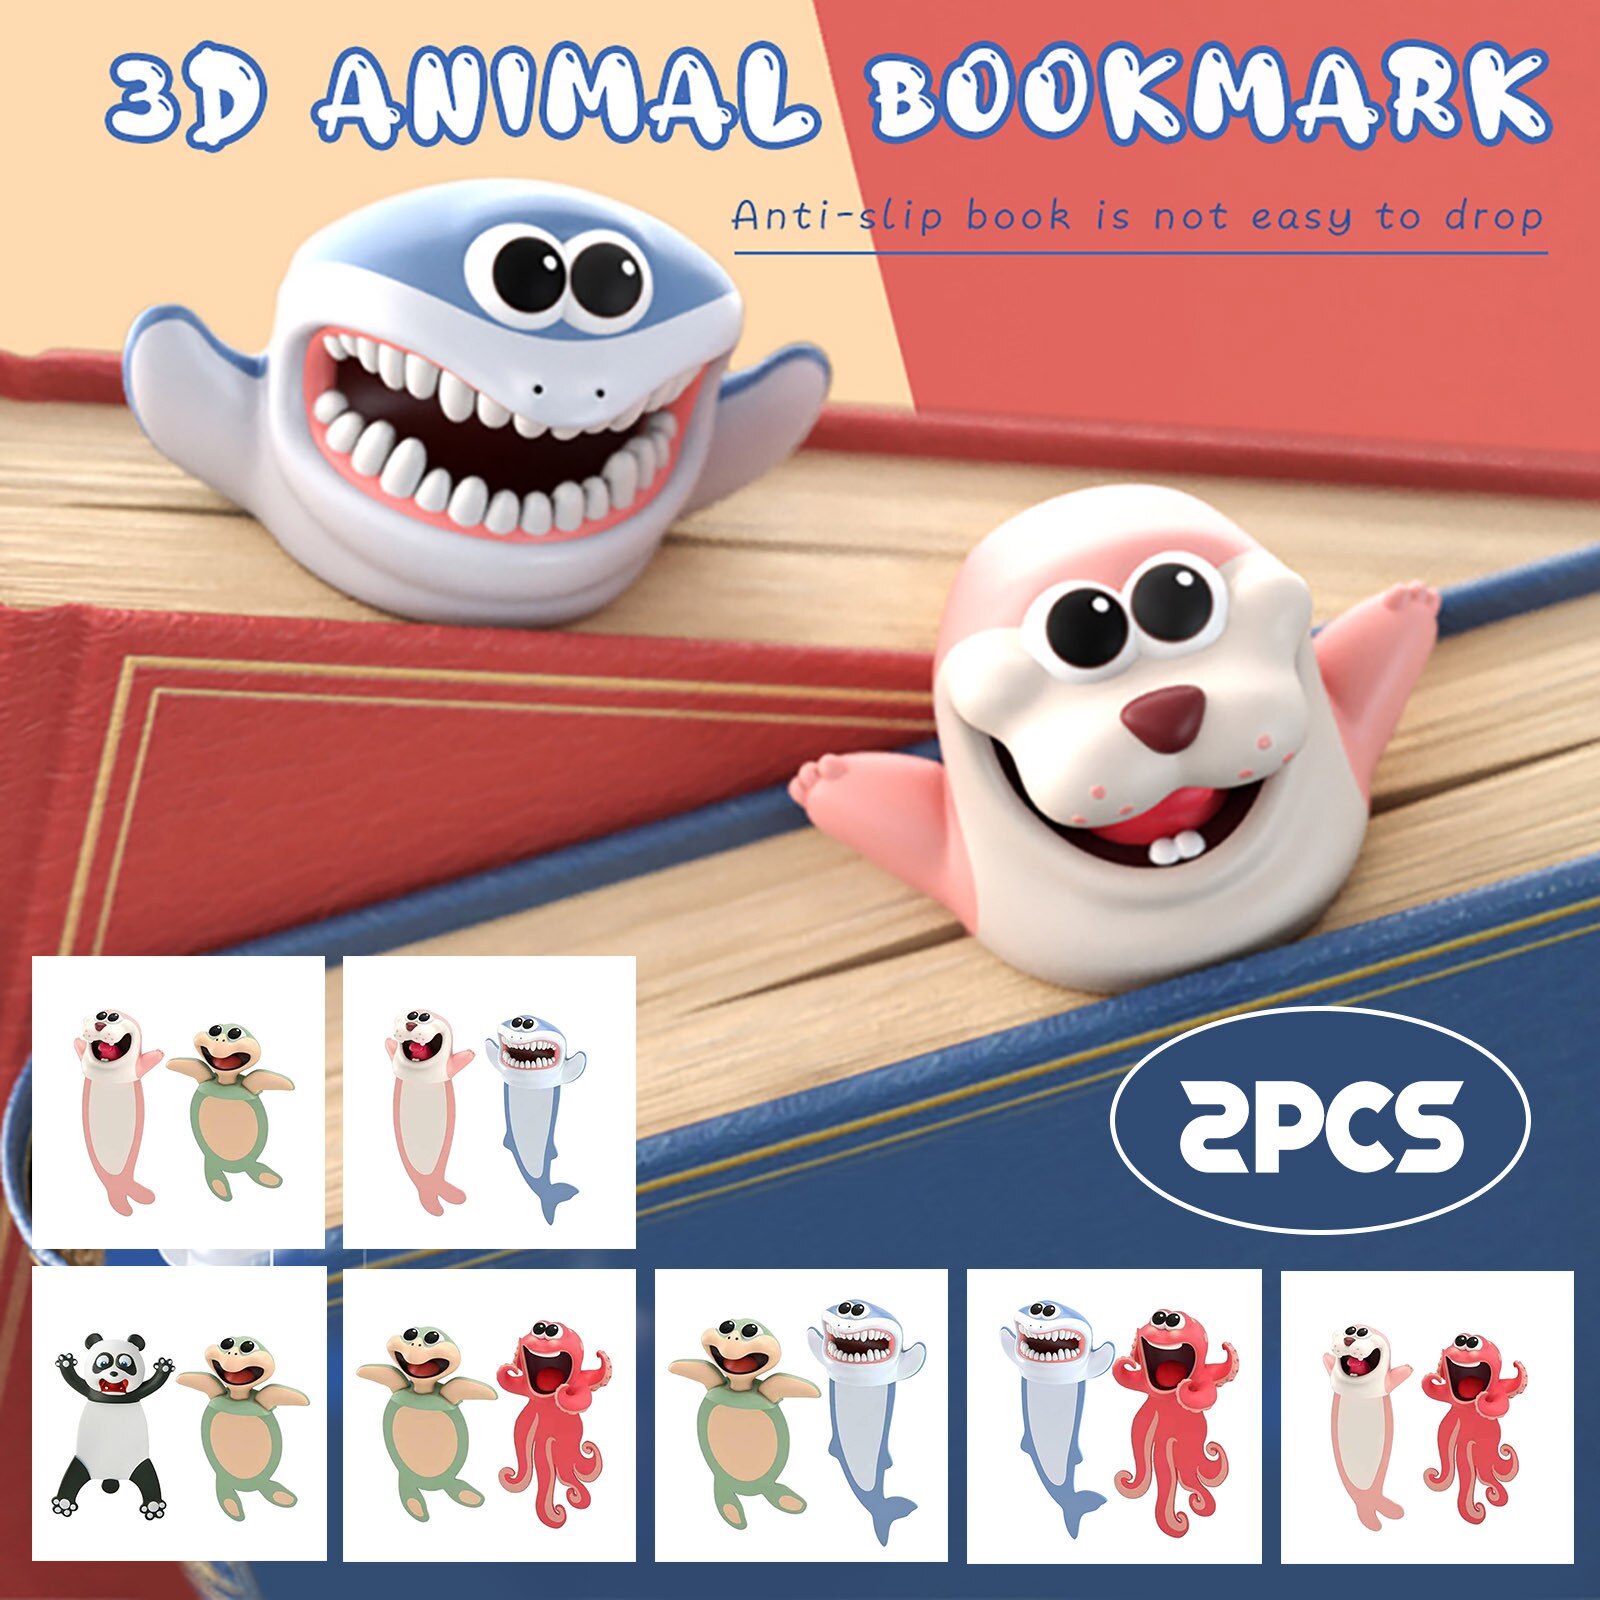 Creatieve 3D Stereo Bookmark Leuke Cartoon Dier Marker Kawaii Kat Panda Bookmark Van Pagina 'S Kids School Briefpapier Leveringen